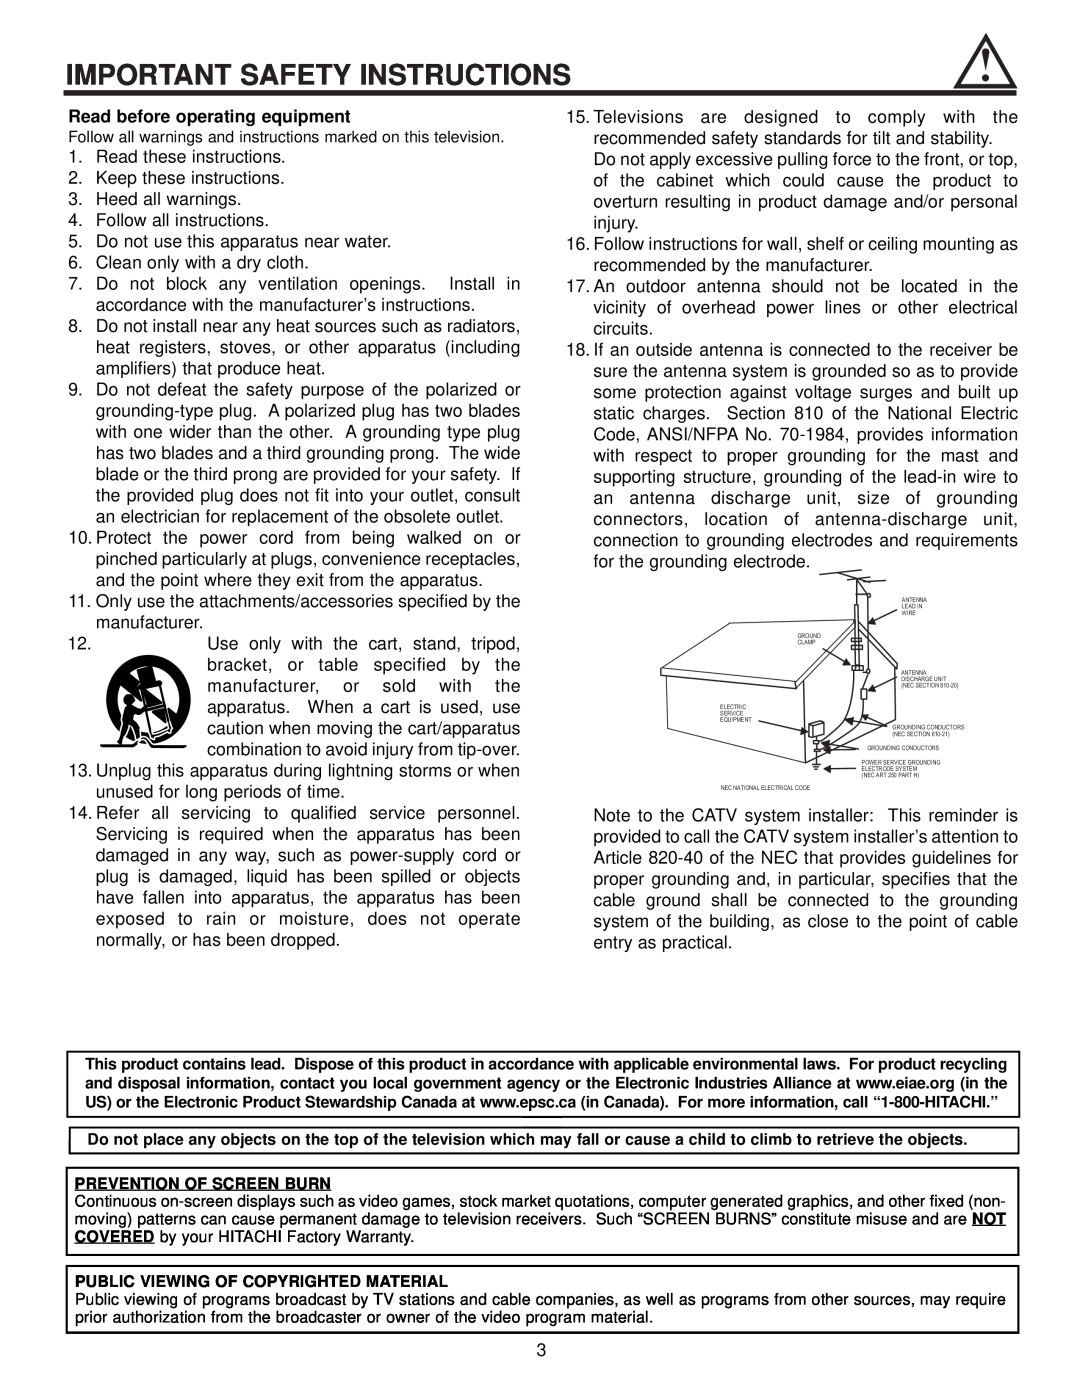 Hitachi 32HDX60 important safety instructions Important Safety Instructions, Read before operating equipment 